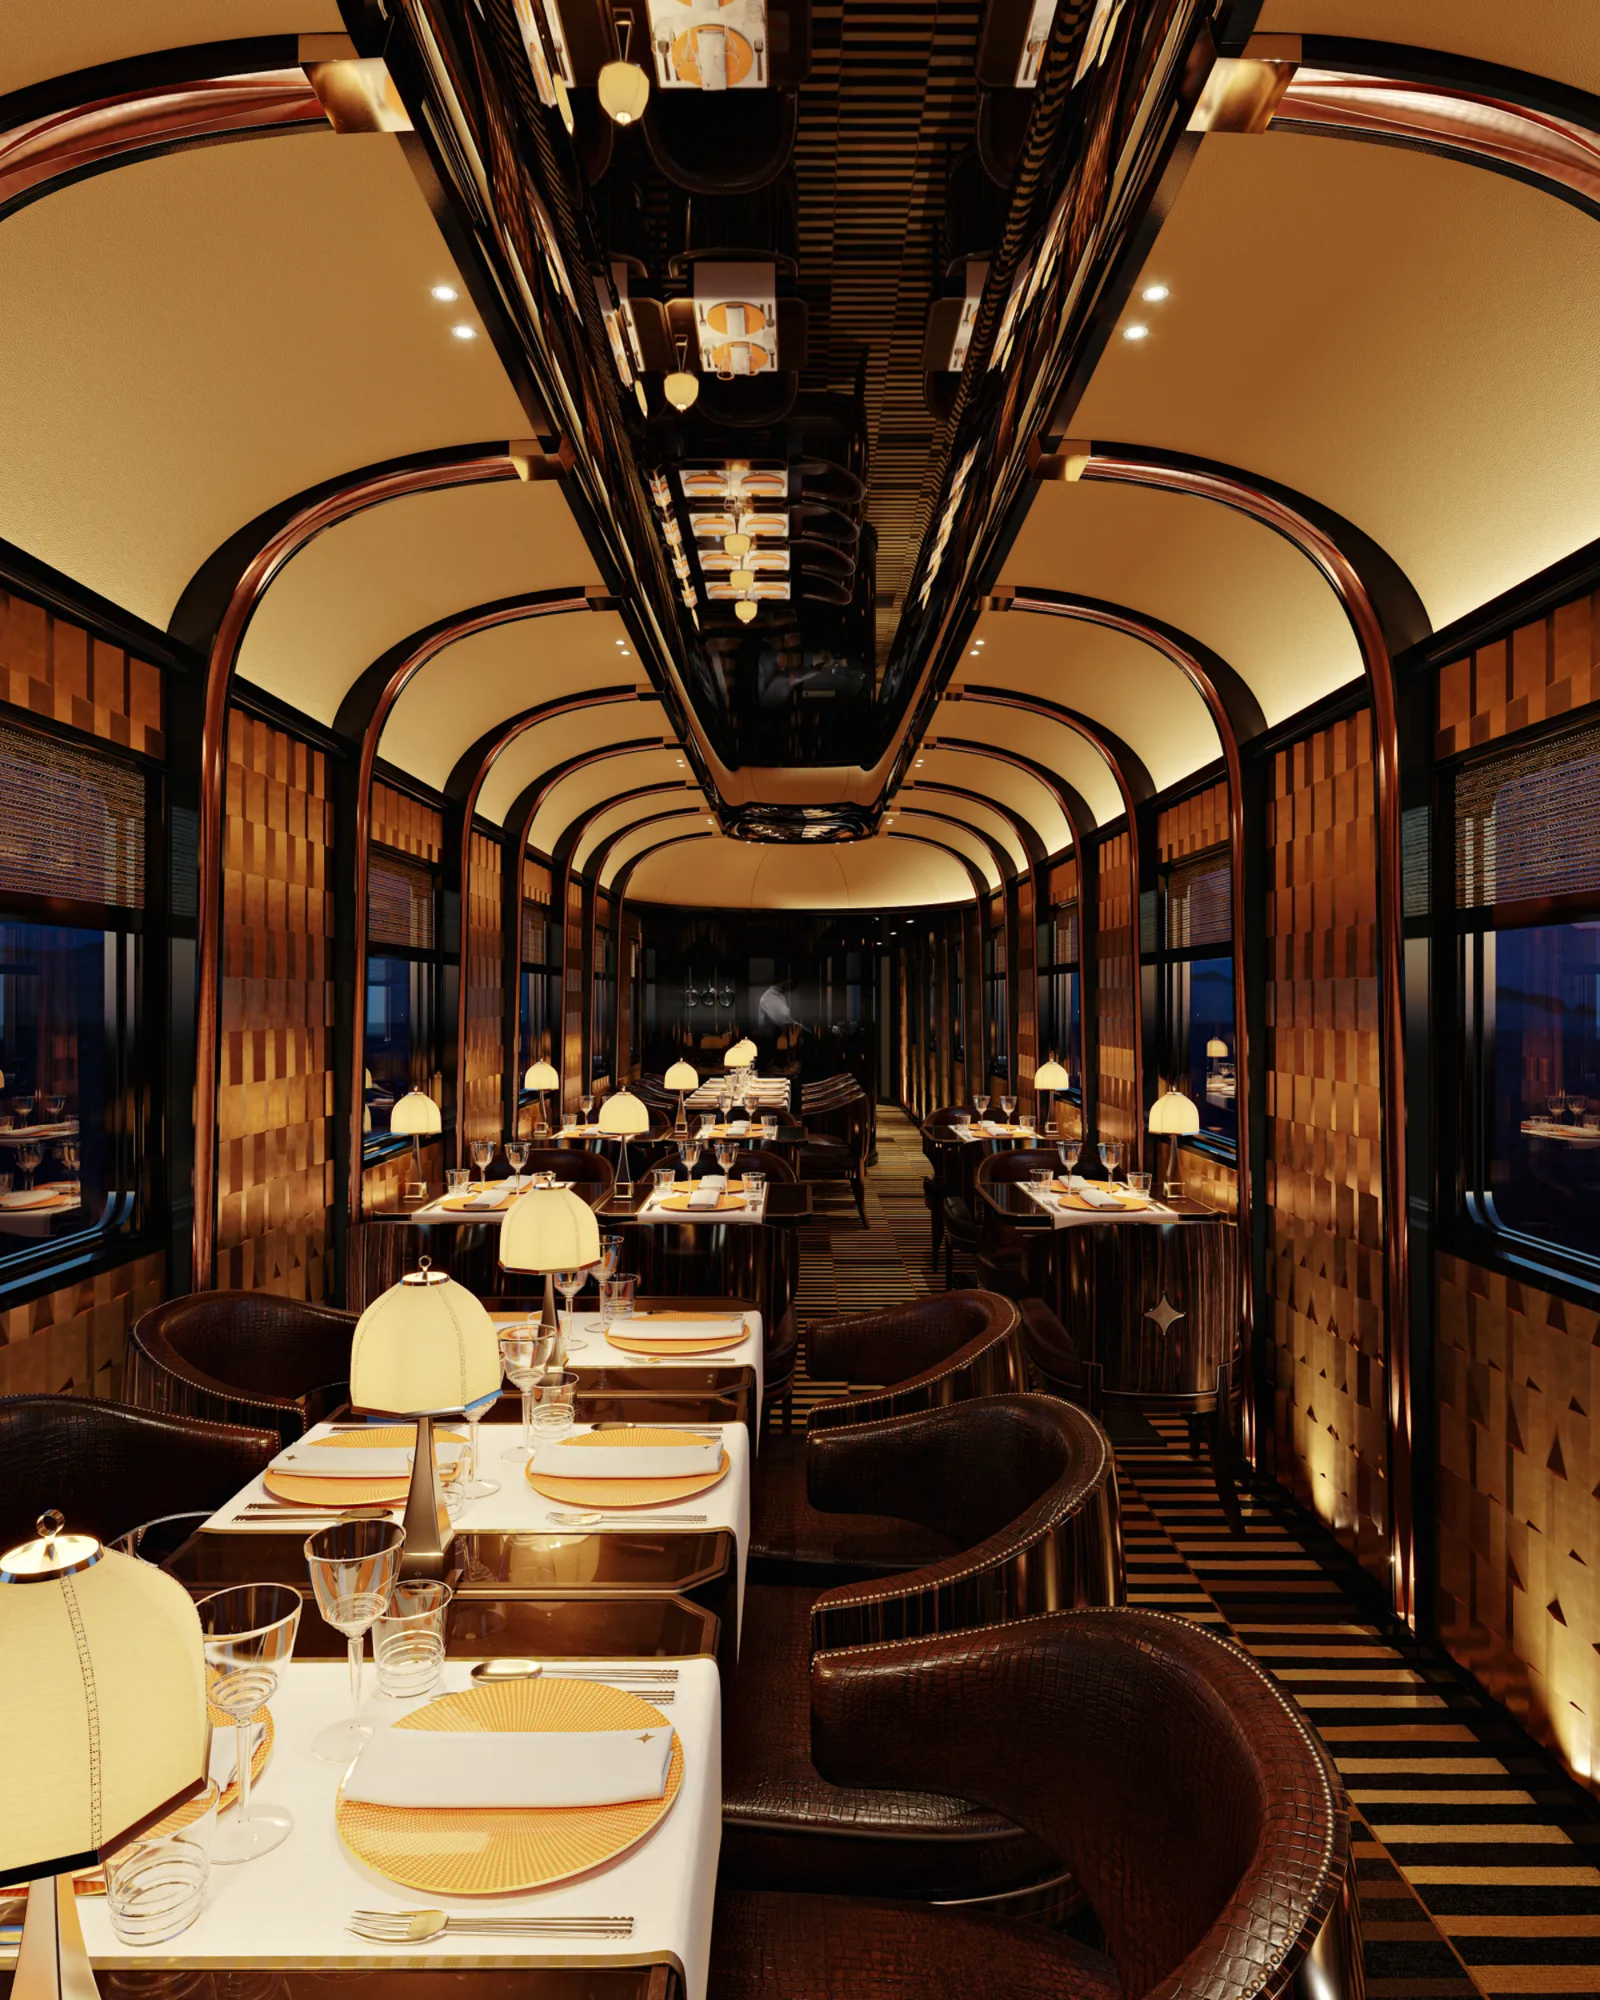 Restauracja nowego pociągu Orient Express (Fot. materiały prasowe; Maxime D’Angeac & Martin Darzacq dla Orient Expressu)